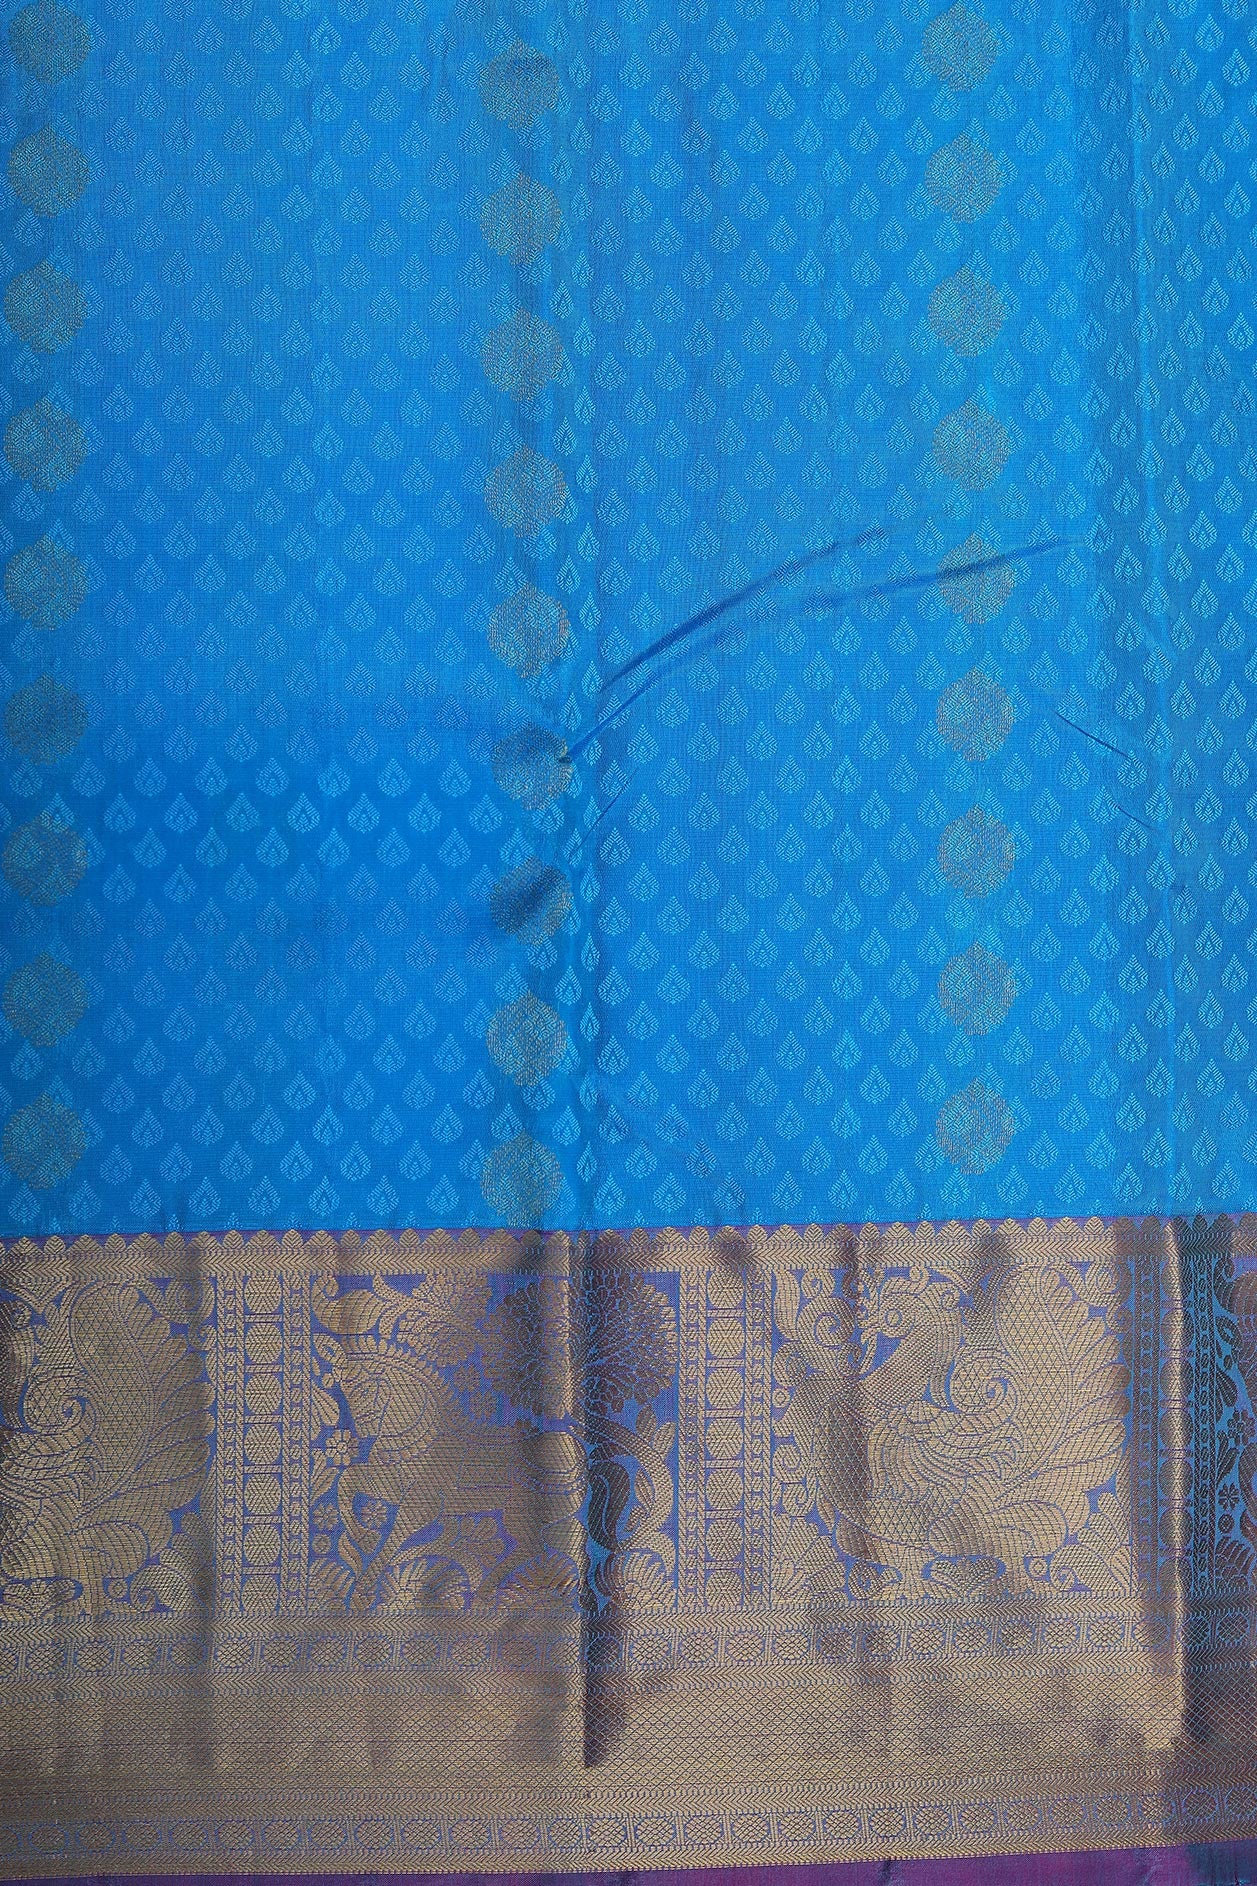 Horse And Annam Border With Thilagam Butta Azure Blue Kanchipuram Silk Saree